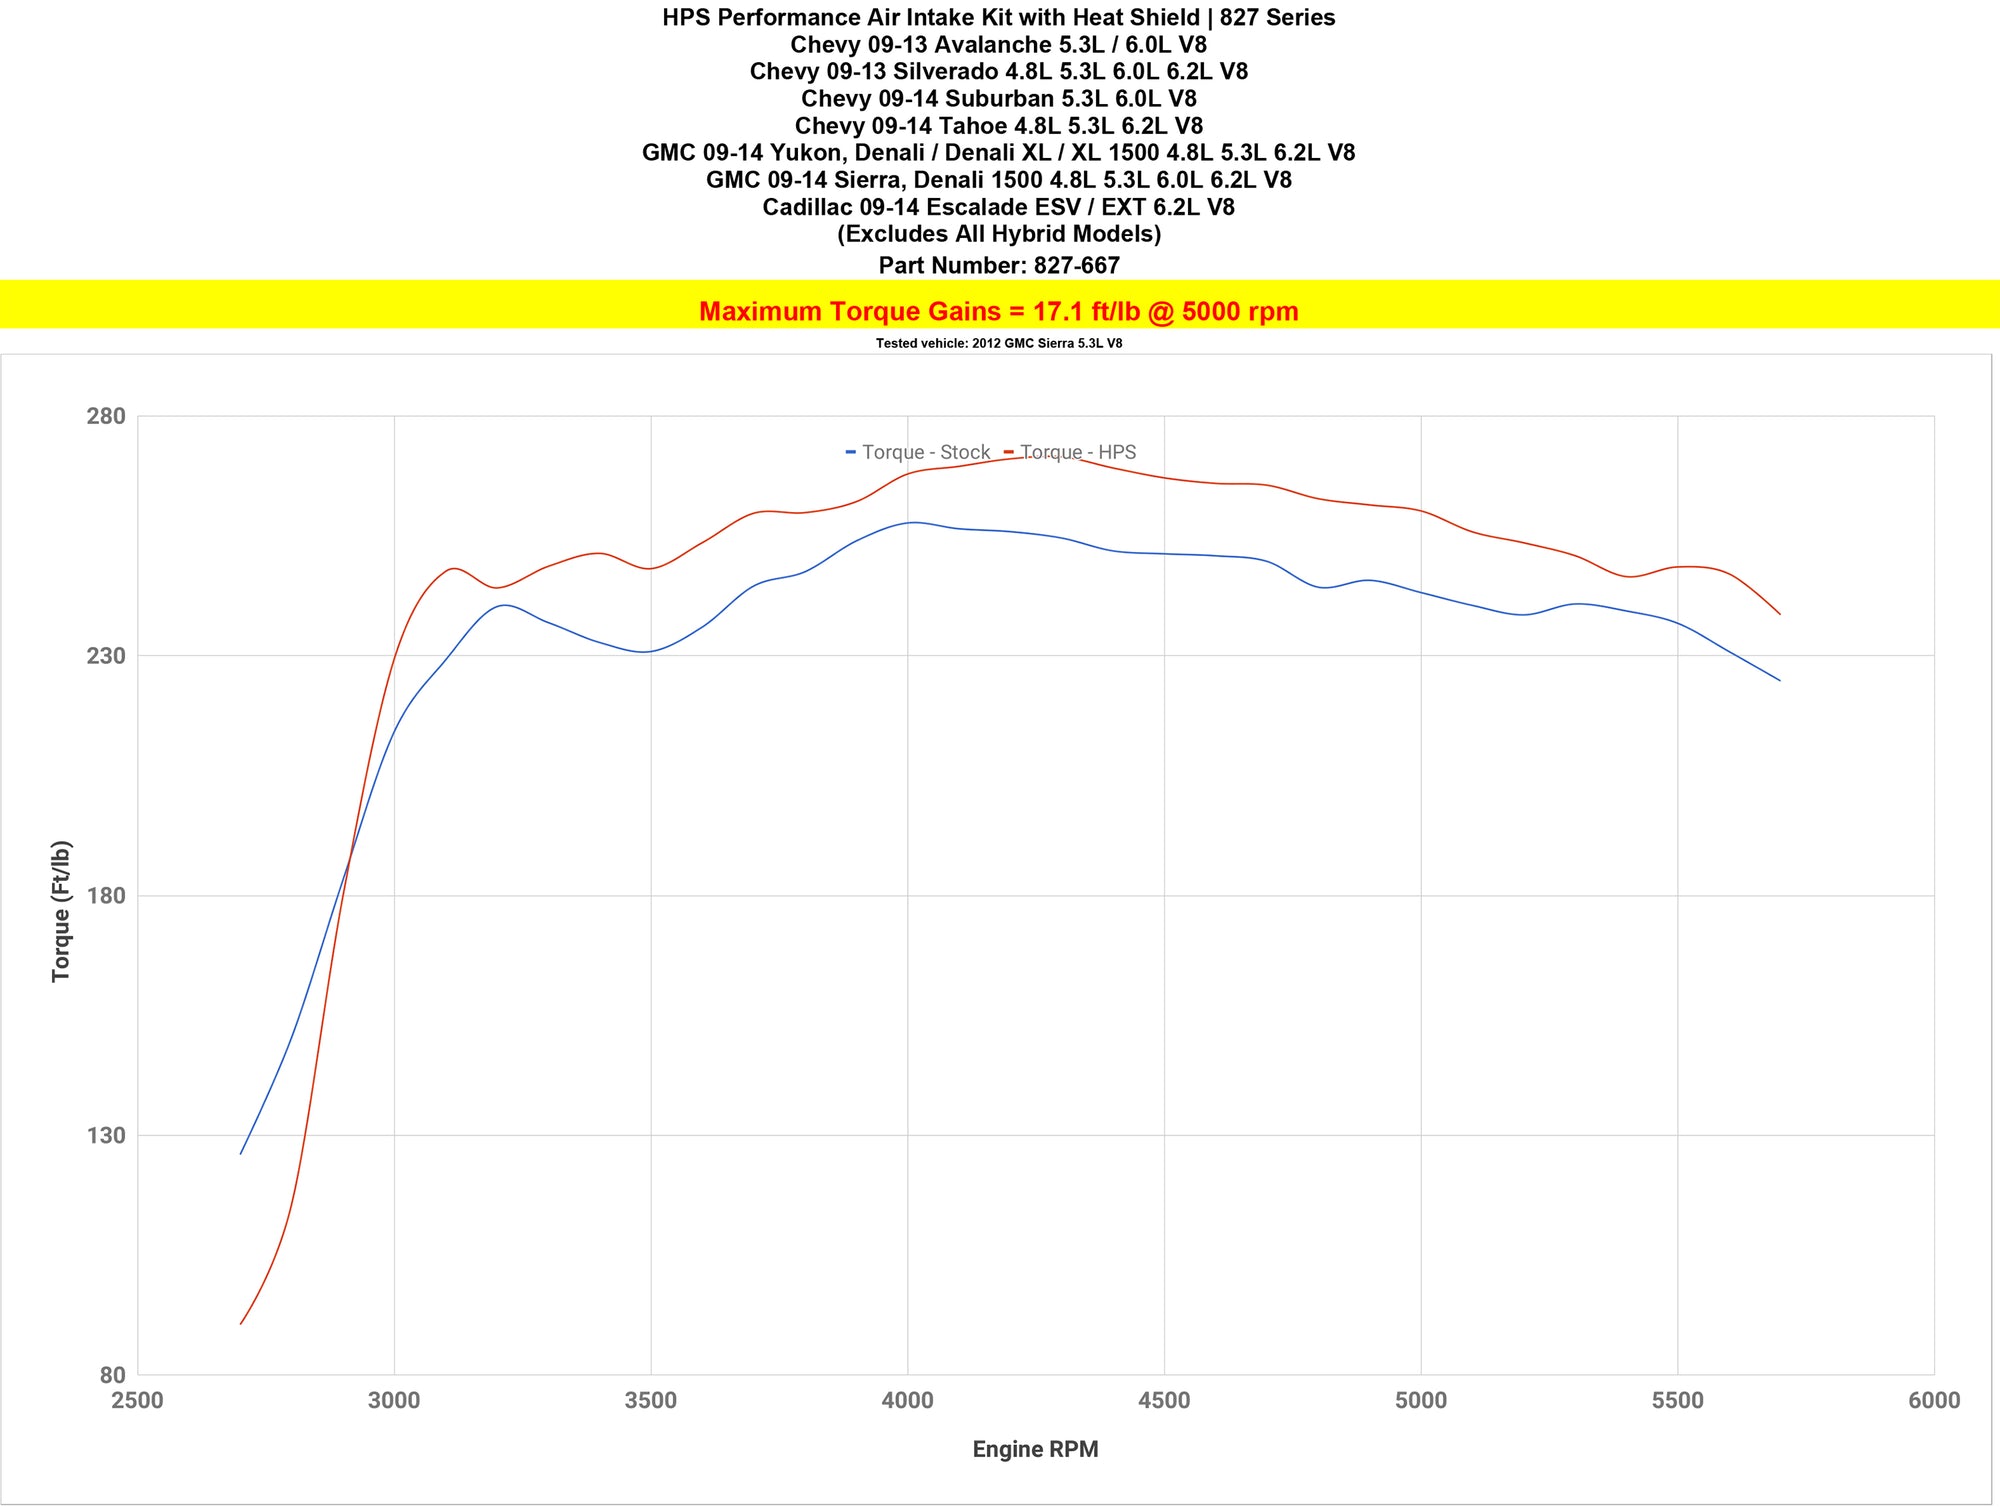 Dyno proven gains 17.1 ft/lb HPS Performance Shortram Air Intake Kit 2009-2014 Chevy Tahoe 4.8L 5.3L 6.2L V8 (Excludes Hybrid) 827-667WB